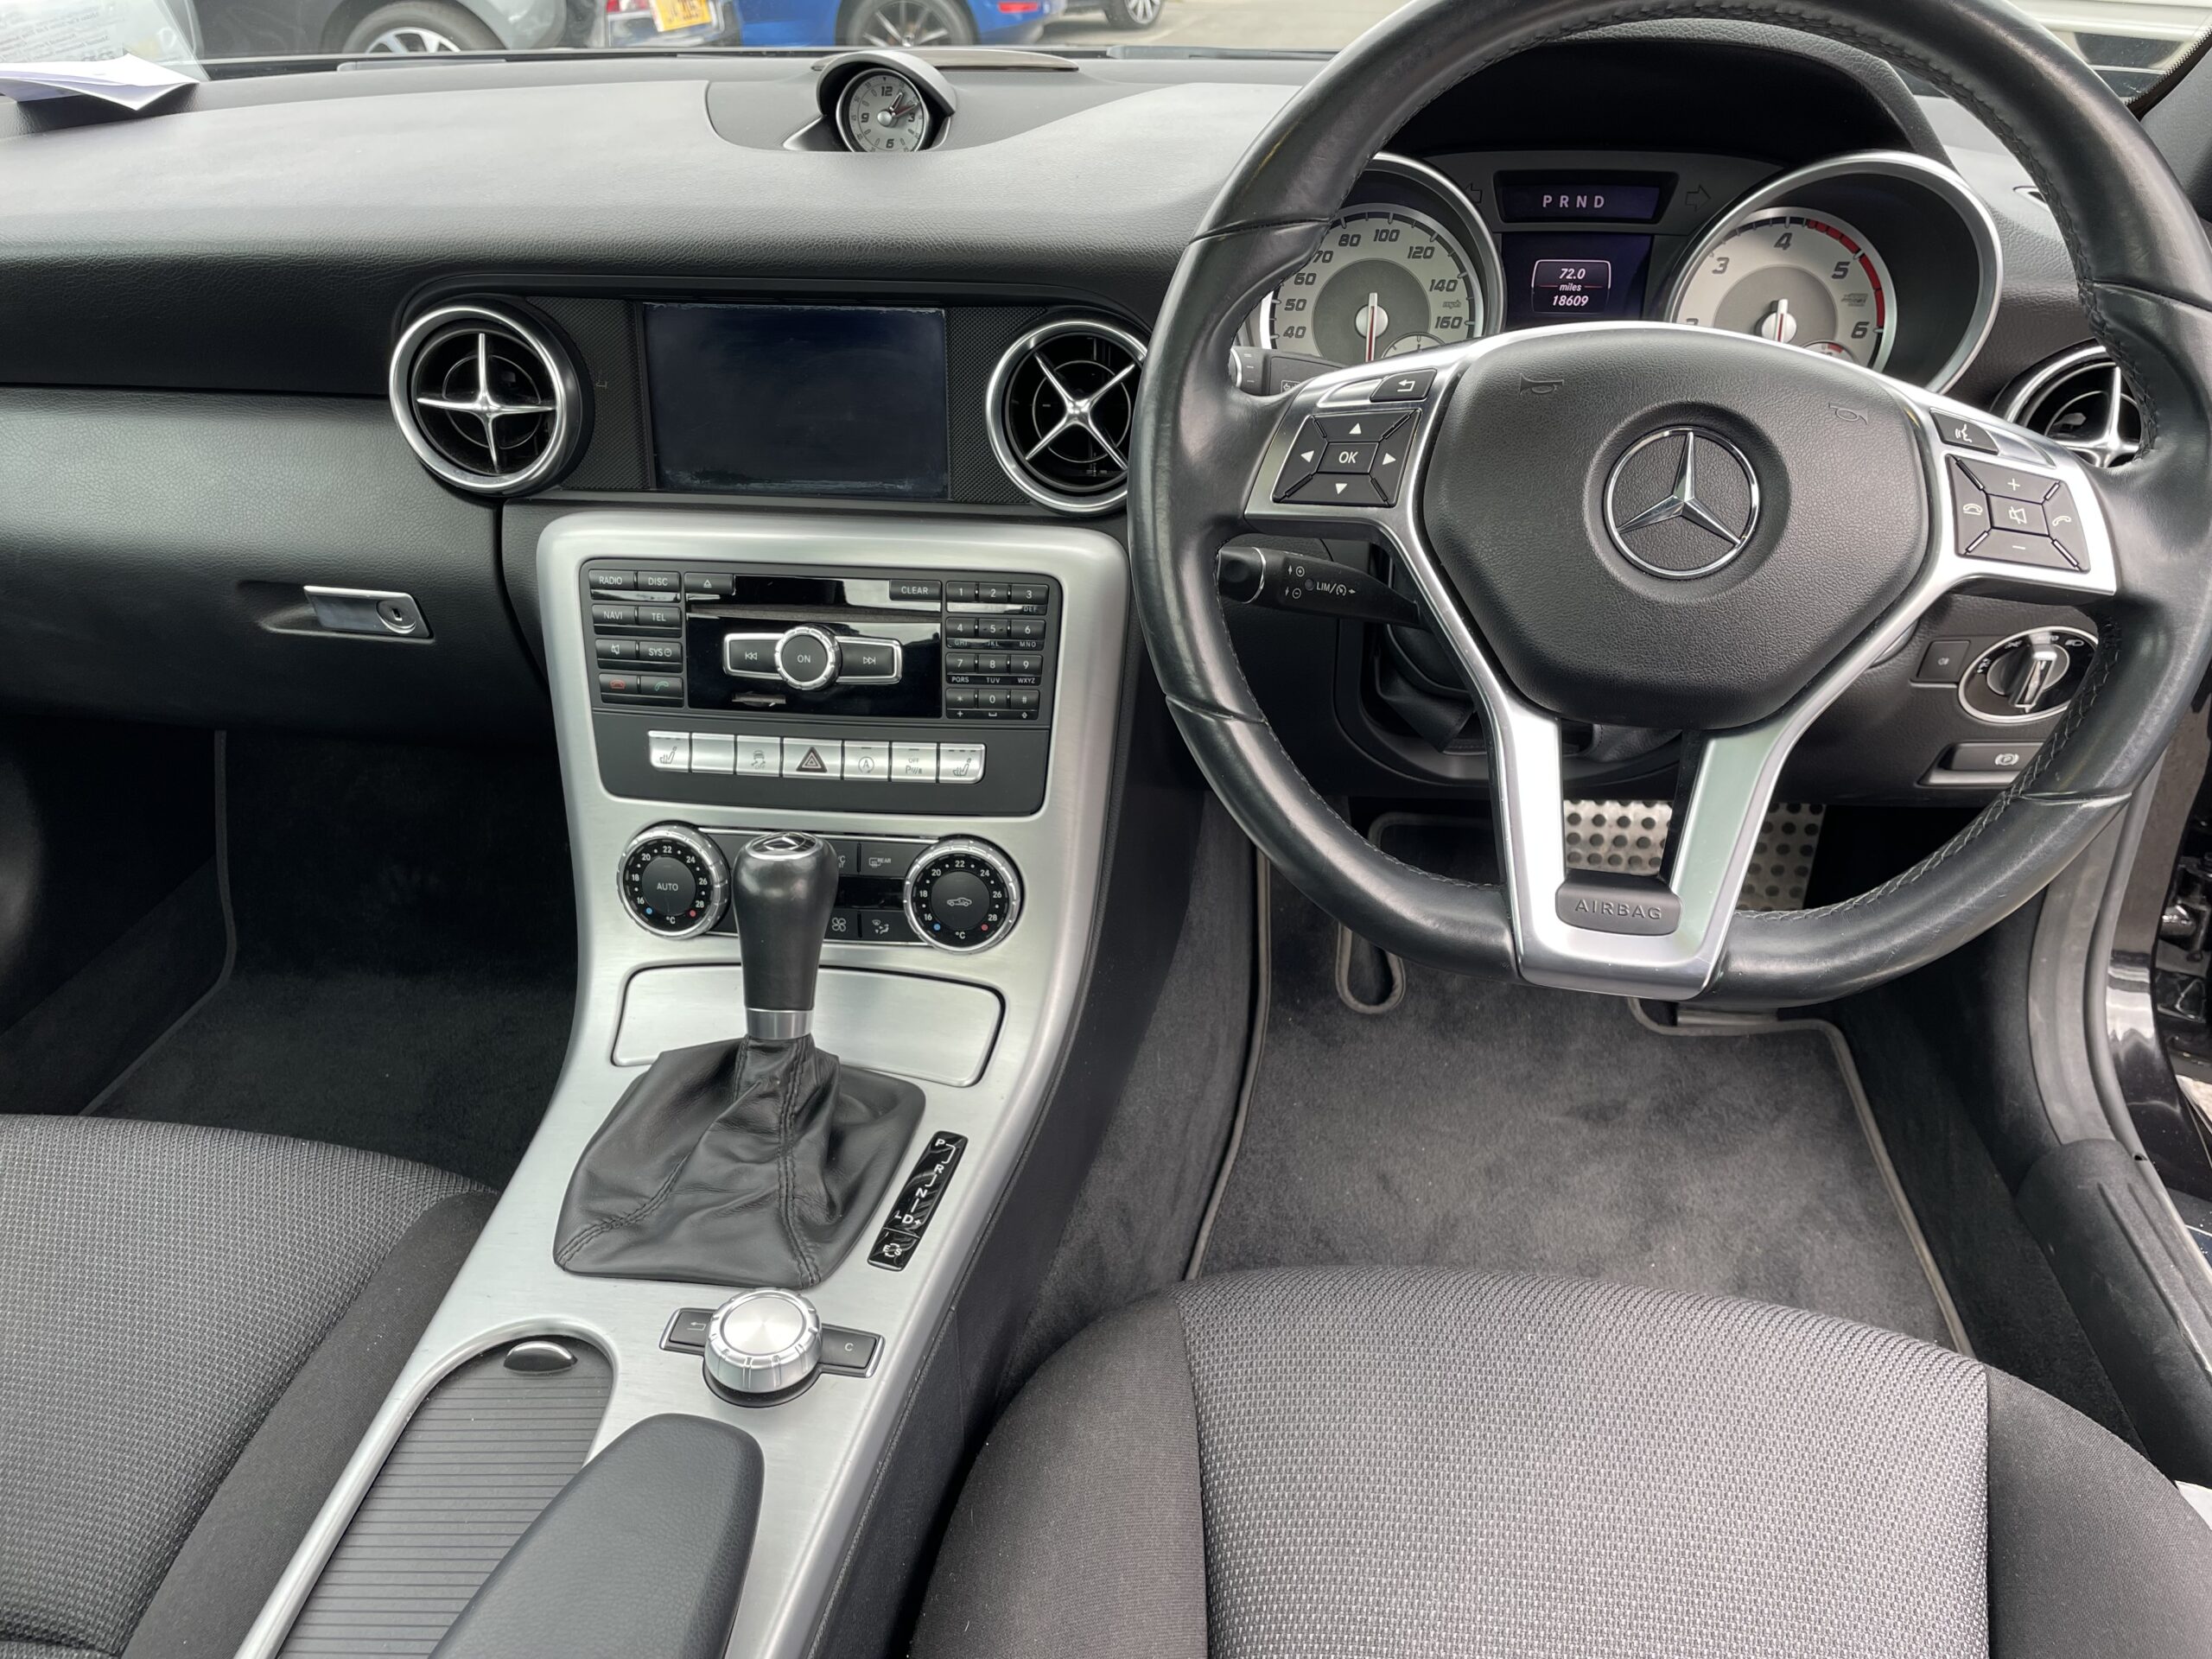 Reduced2015 Merc Benz Slk 250 Cdi Convertible Automatic Heated Seatsbluetoothparking Sensors Now Only 12995